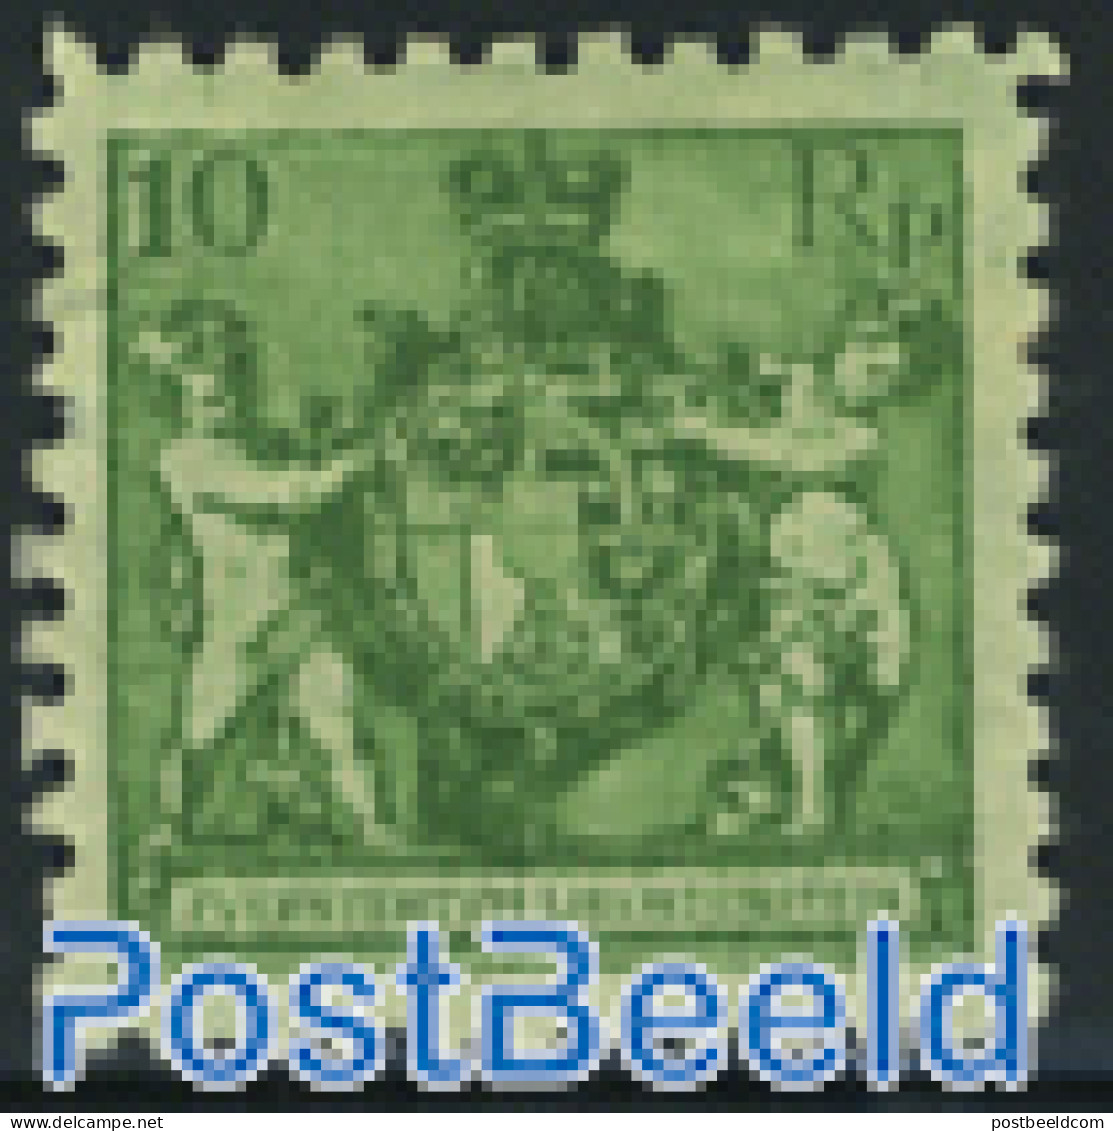 Liechtenstein 1921 10Rp, Perf. 9.5, Stamp Out Of Set, Mint NH, History - Coat Of Arms - Ongebruikt